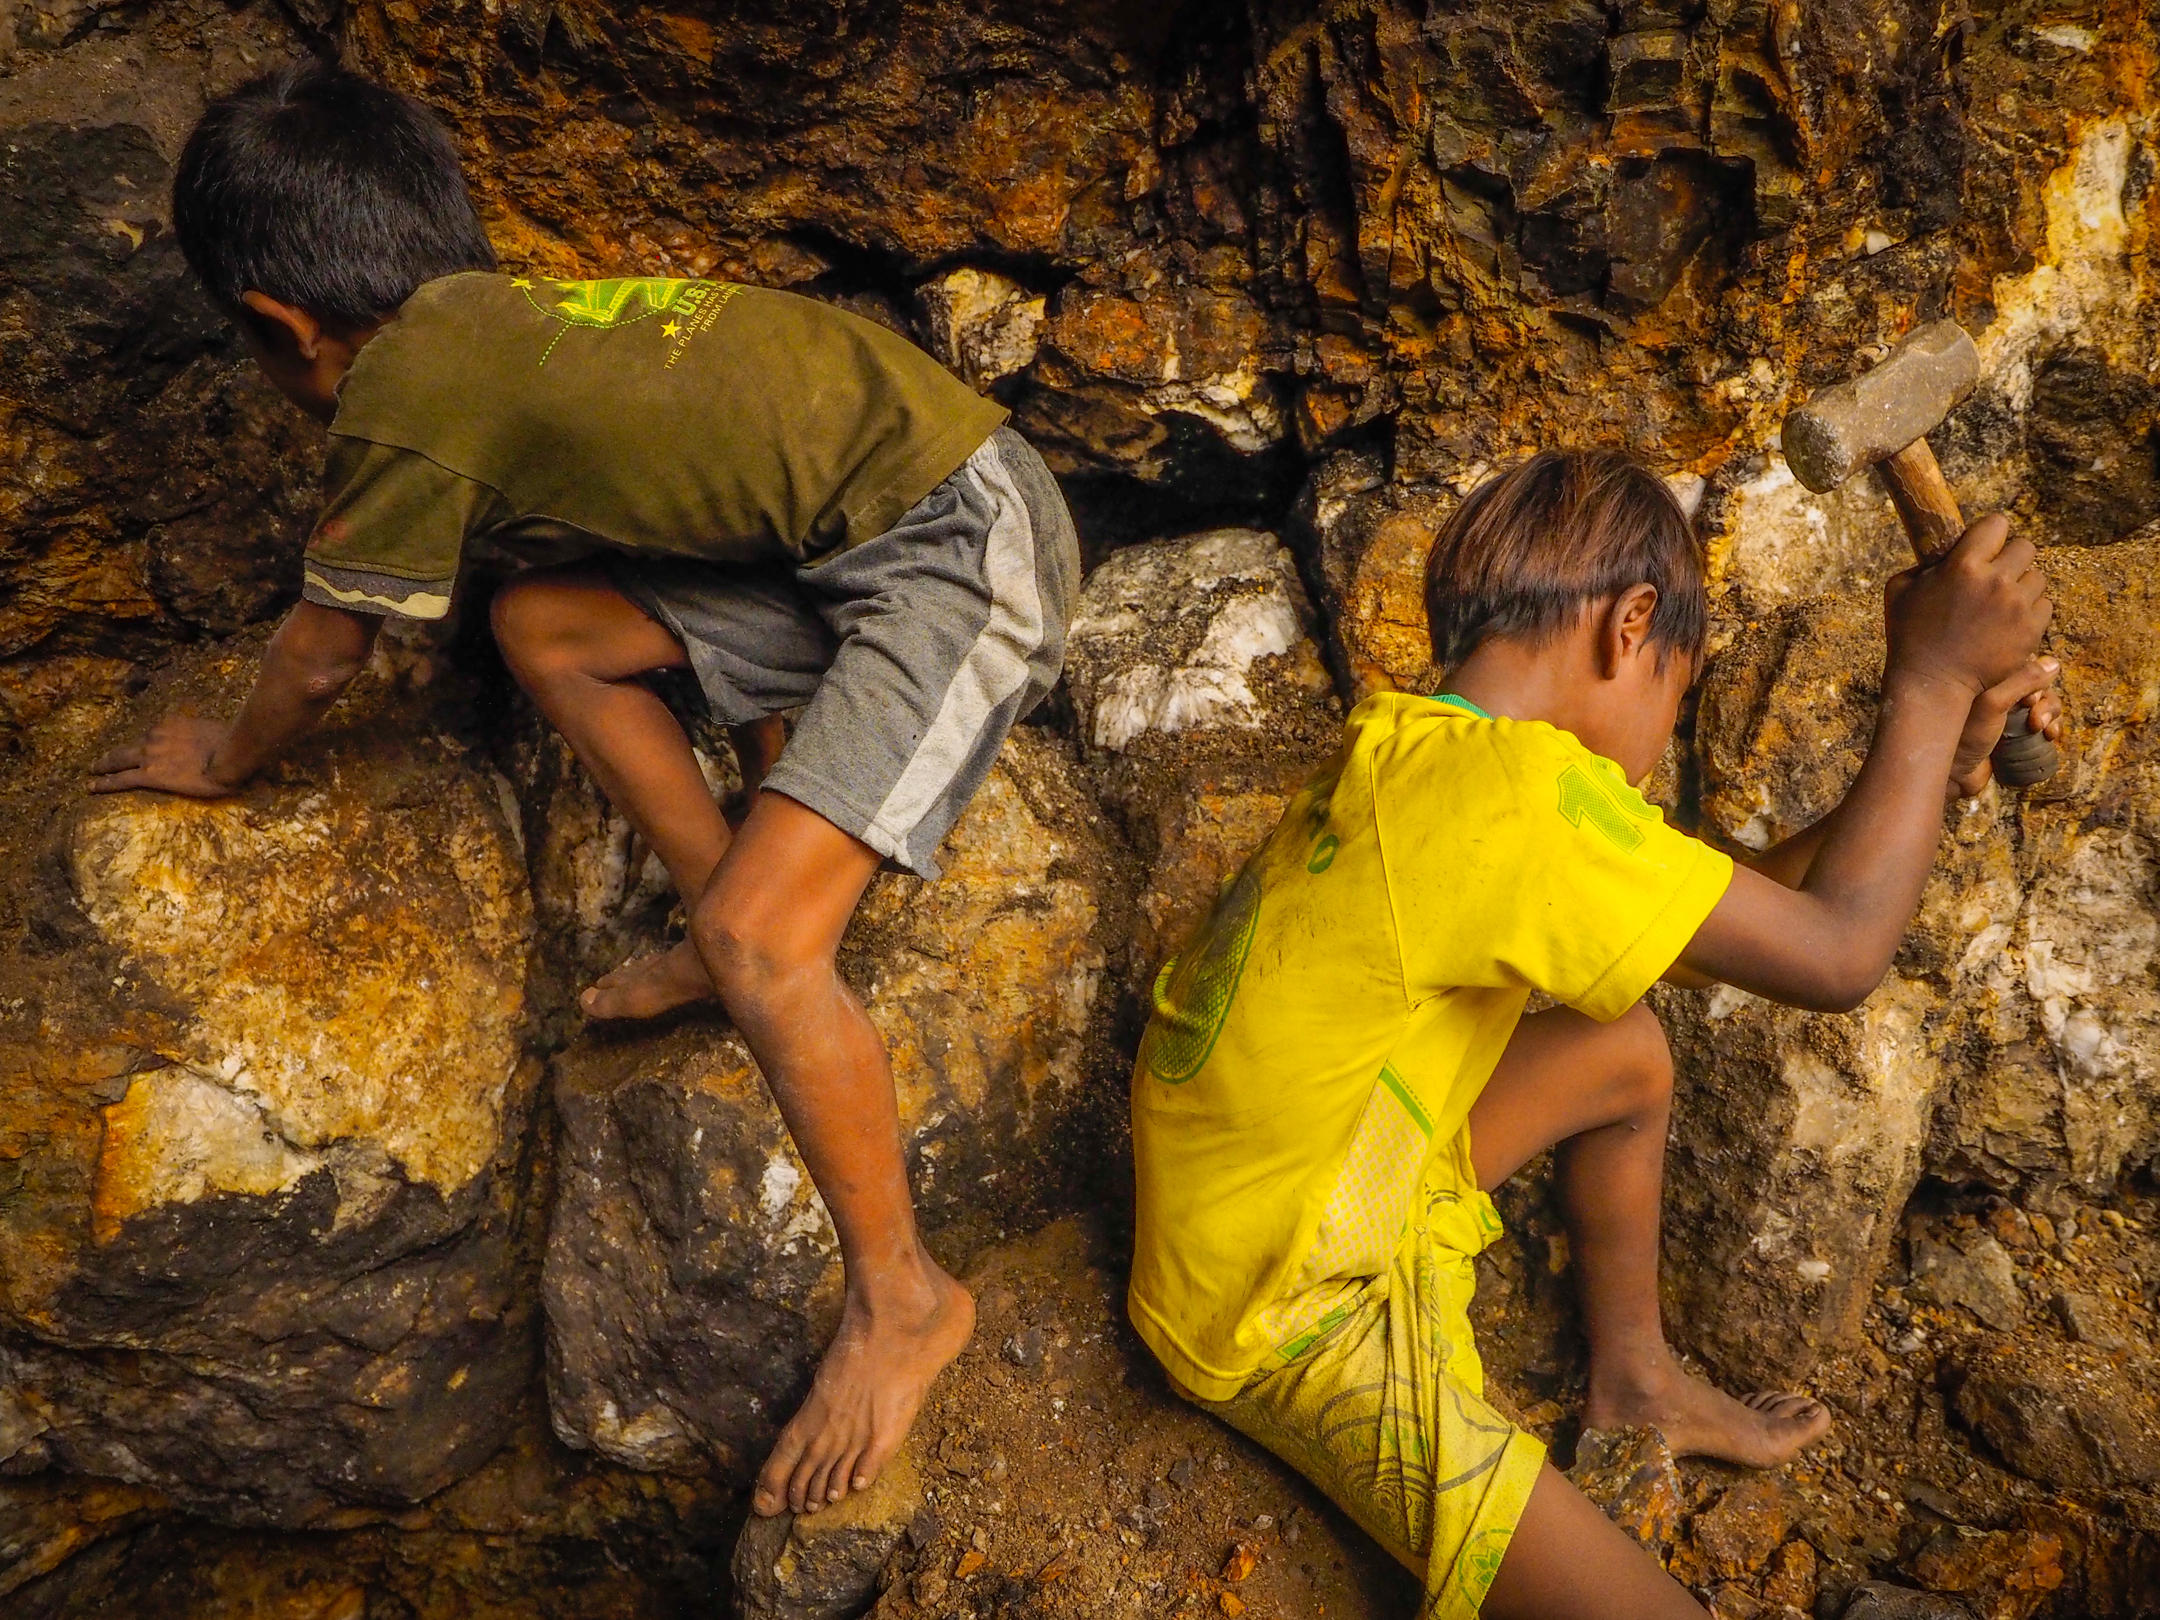 Philippines, Indonesia Child Labor in Gold Mines